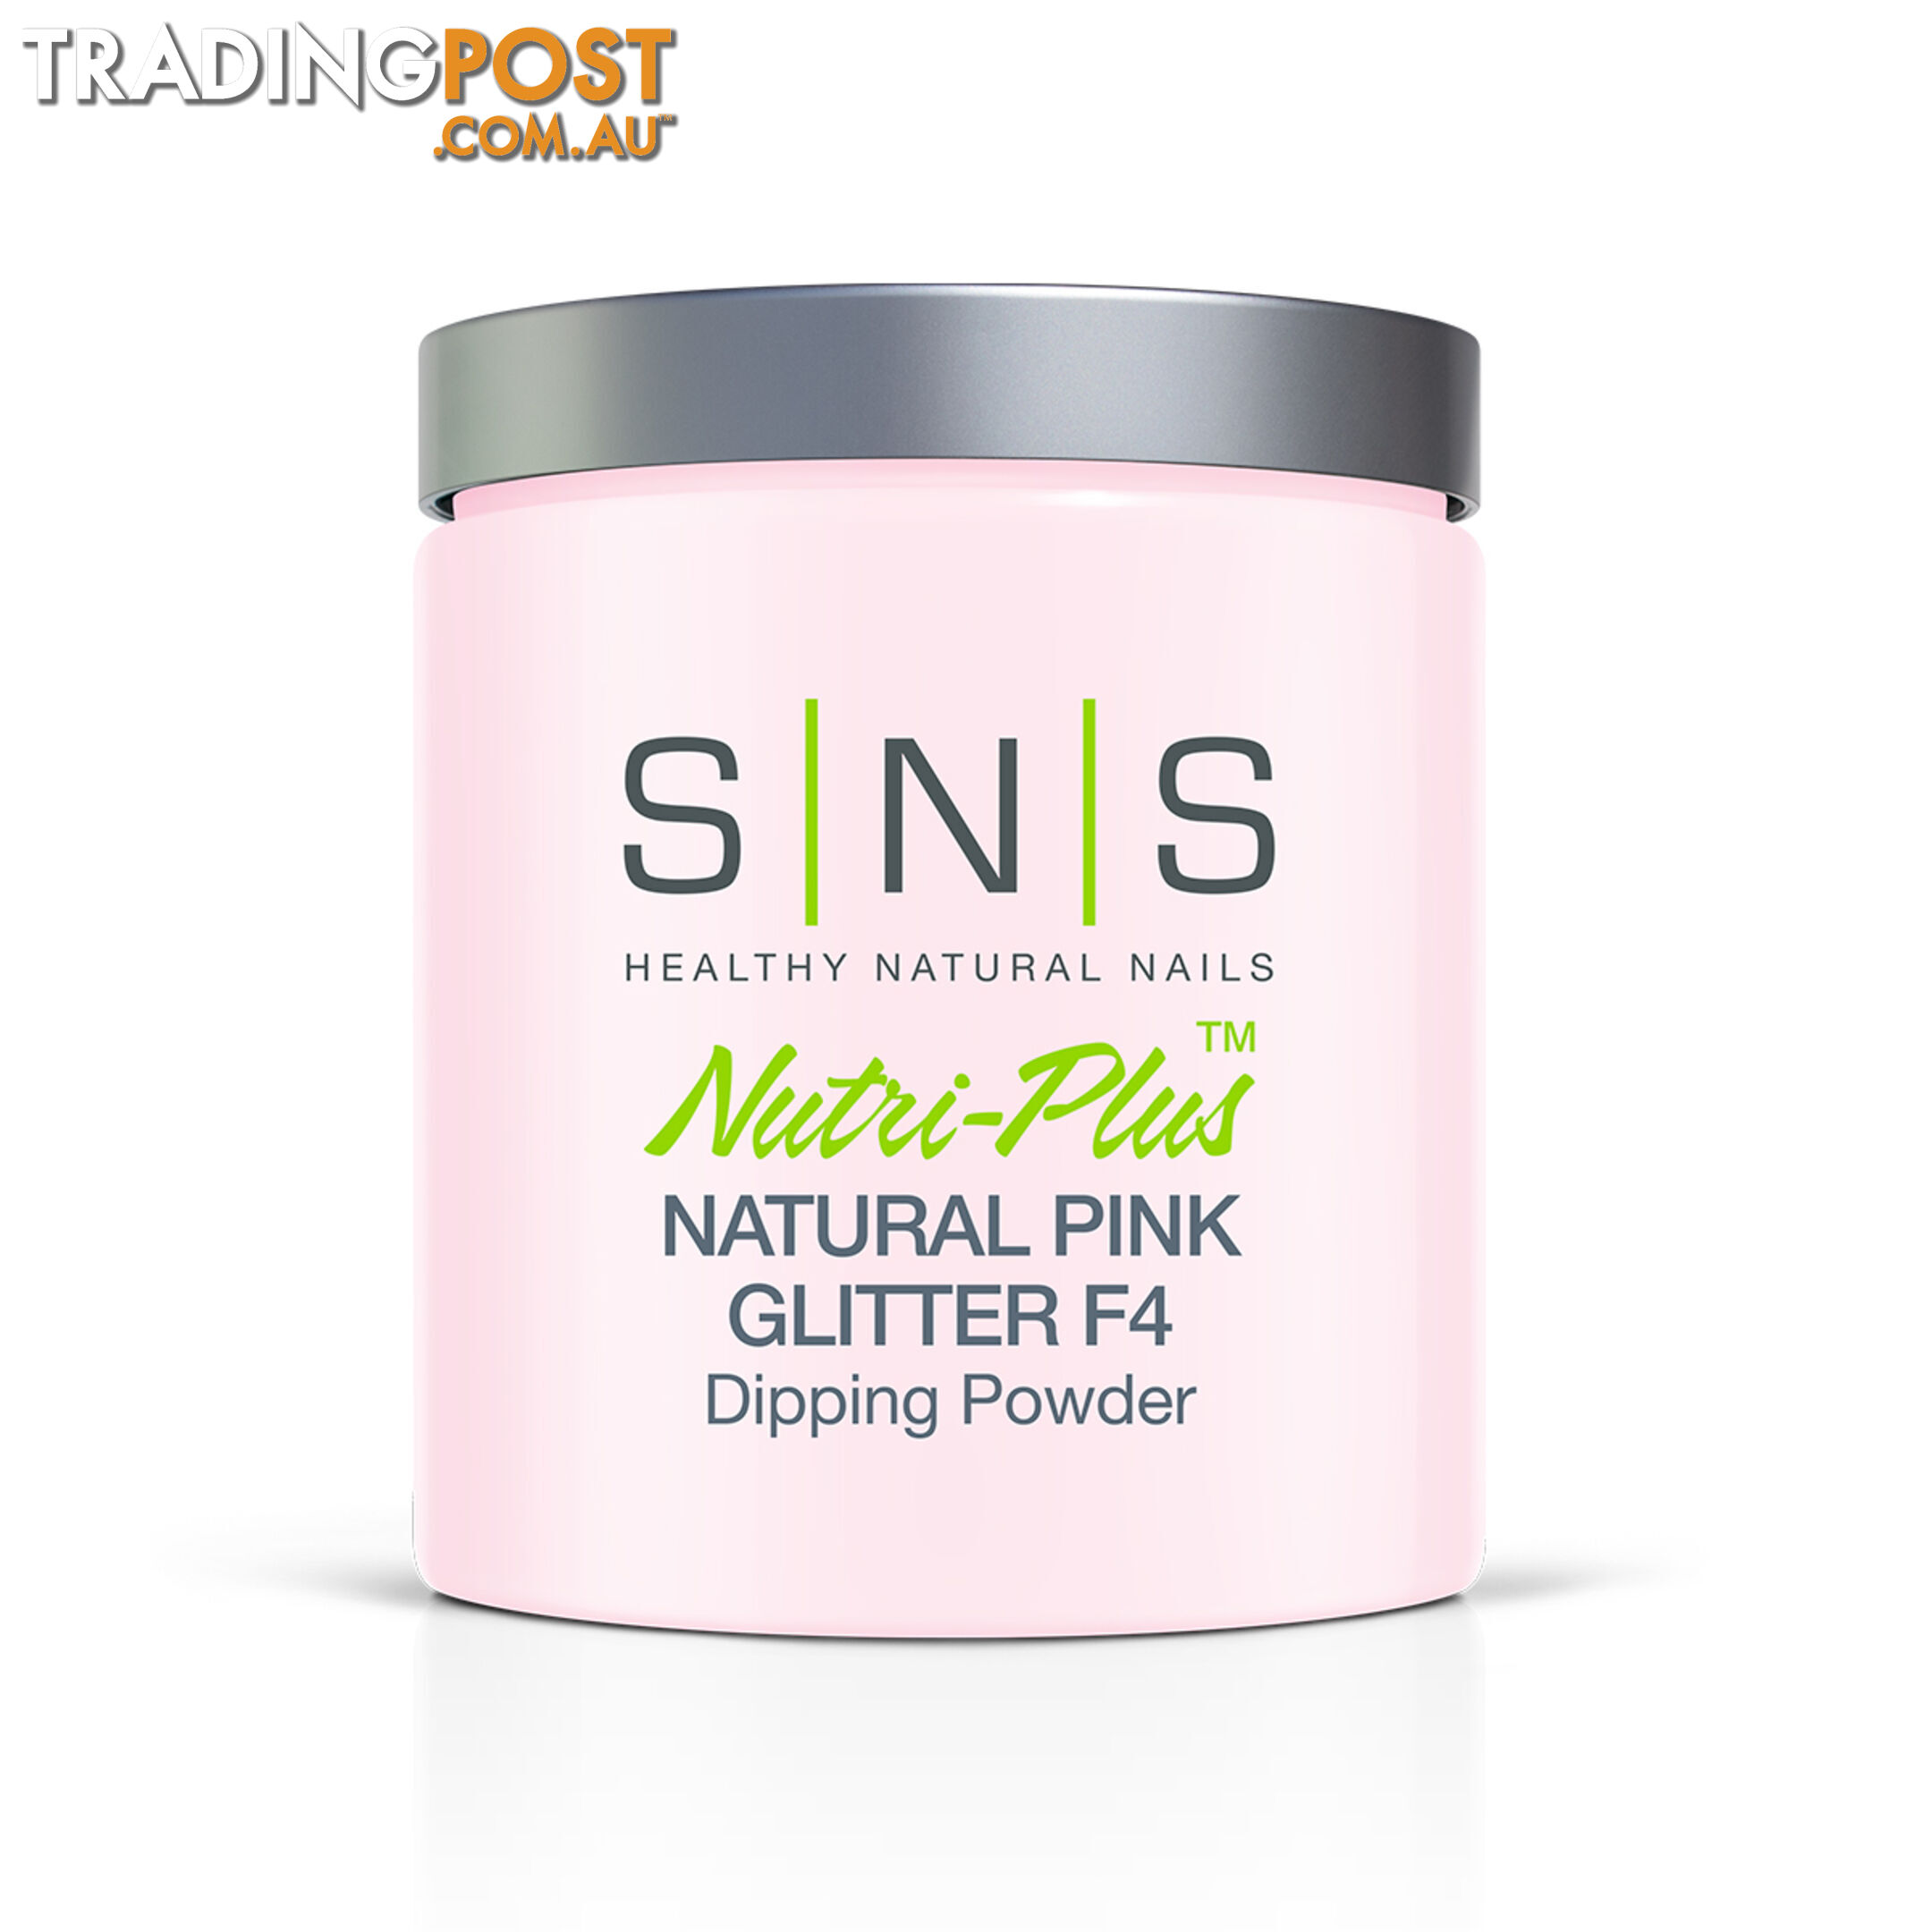 SNS Natural Pink Glitter F4 (16oz) 448g - 635635735524